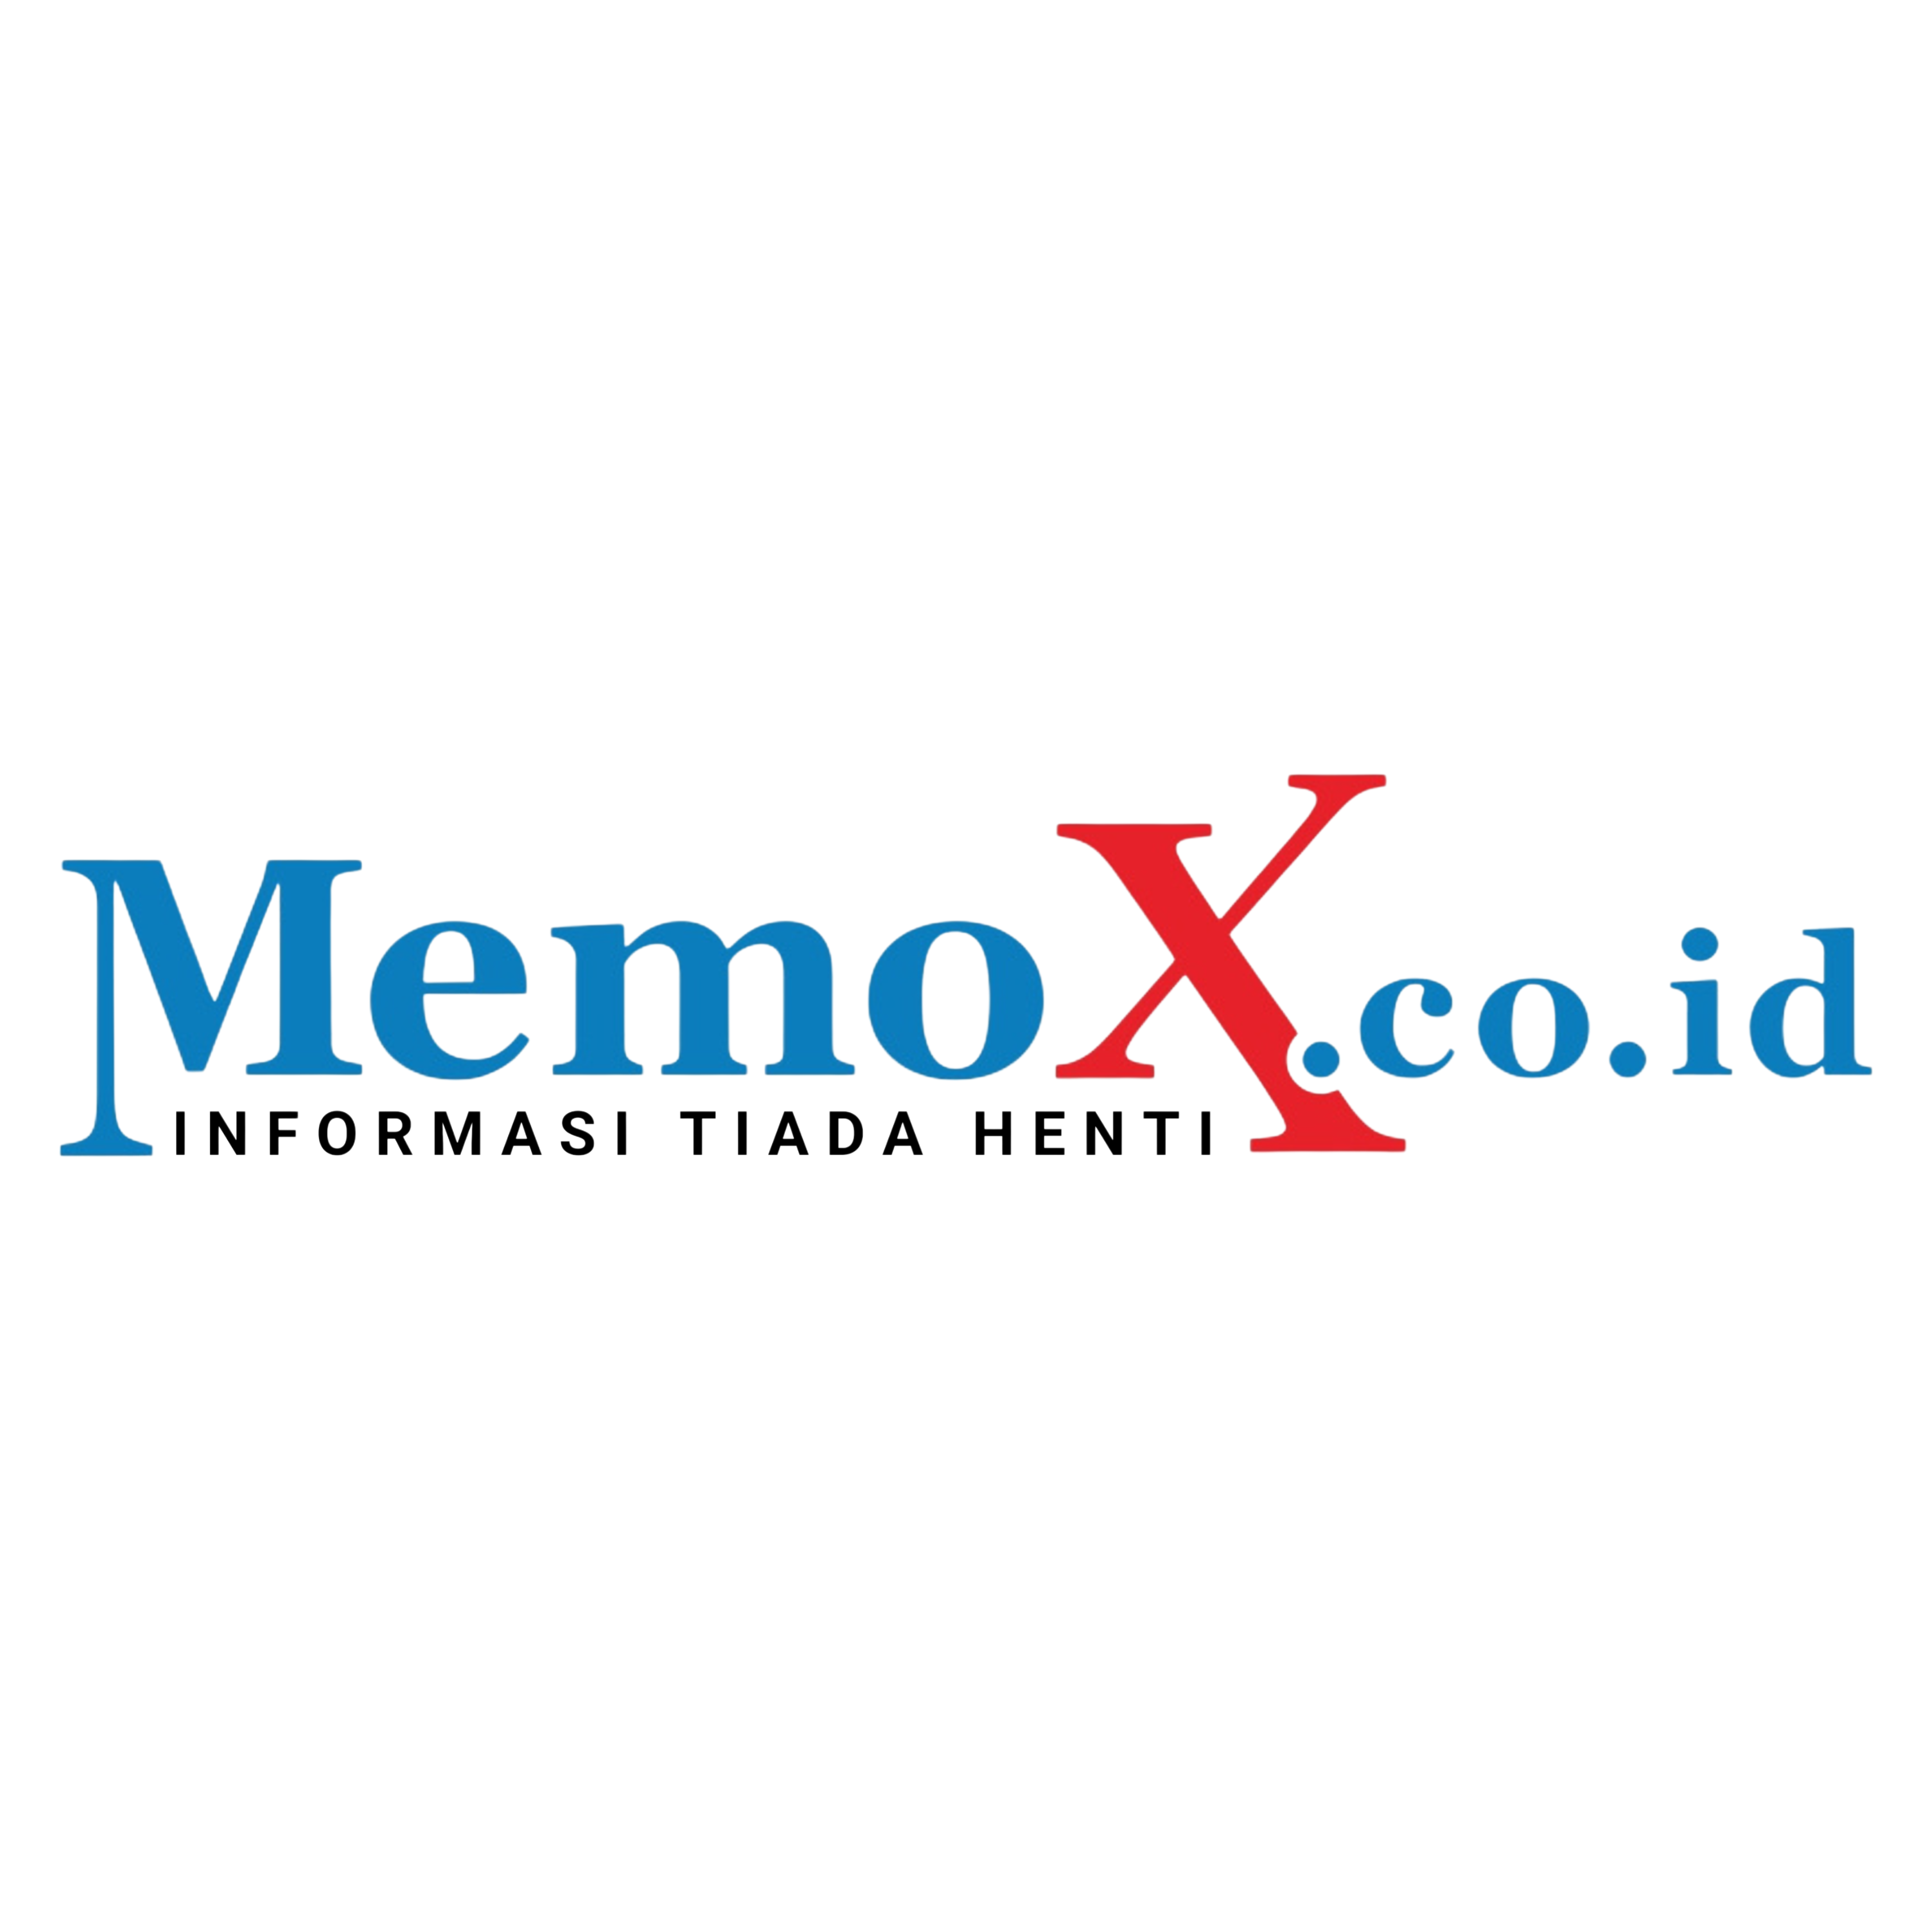 MEMOX.co.id